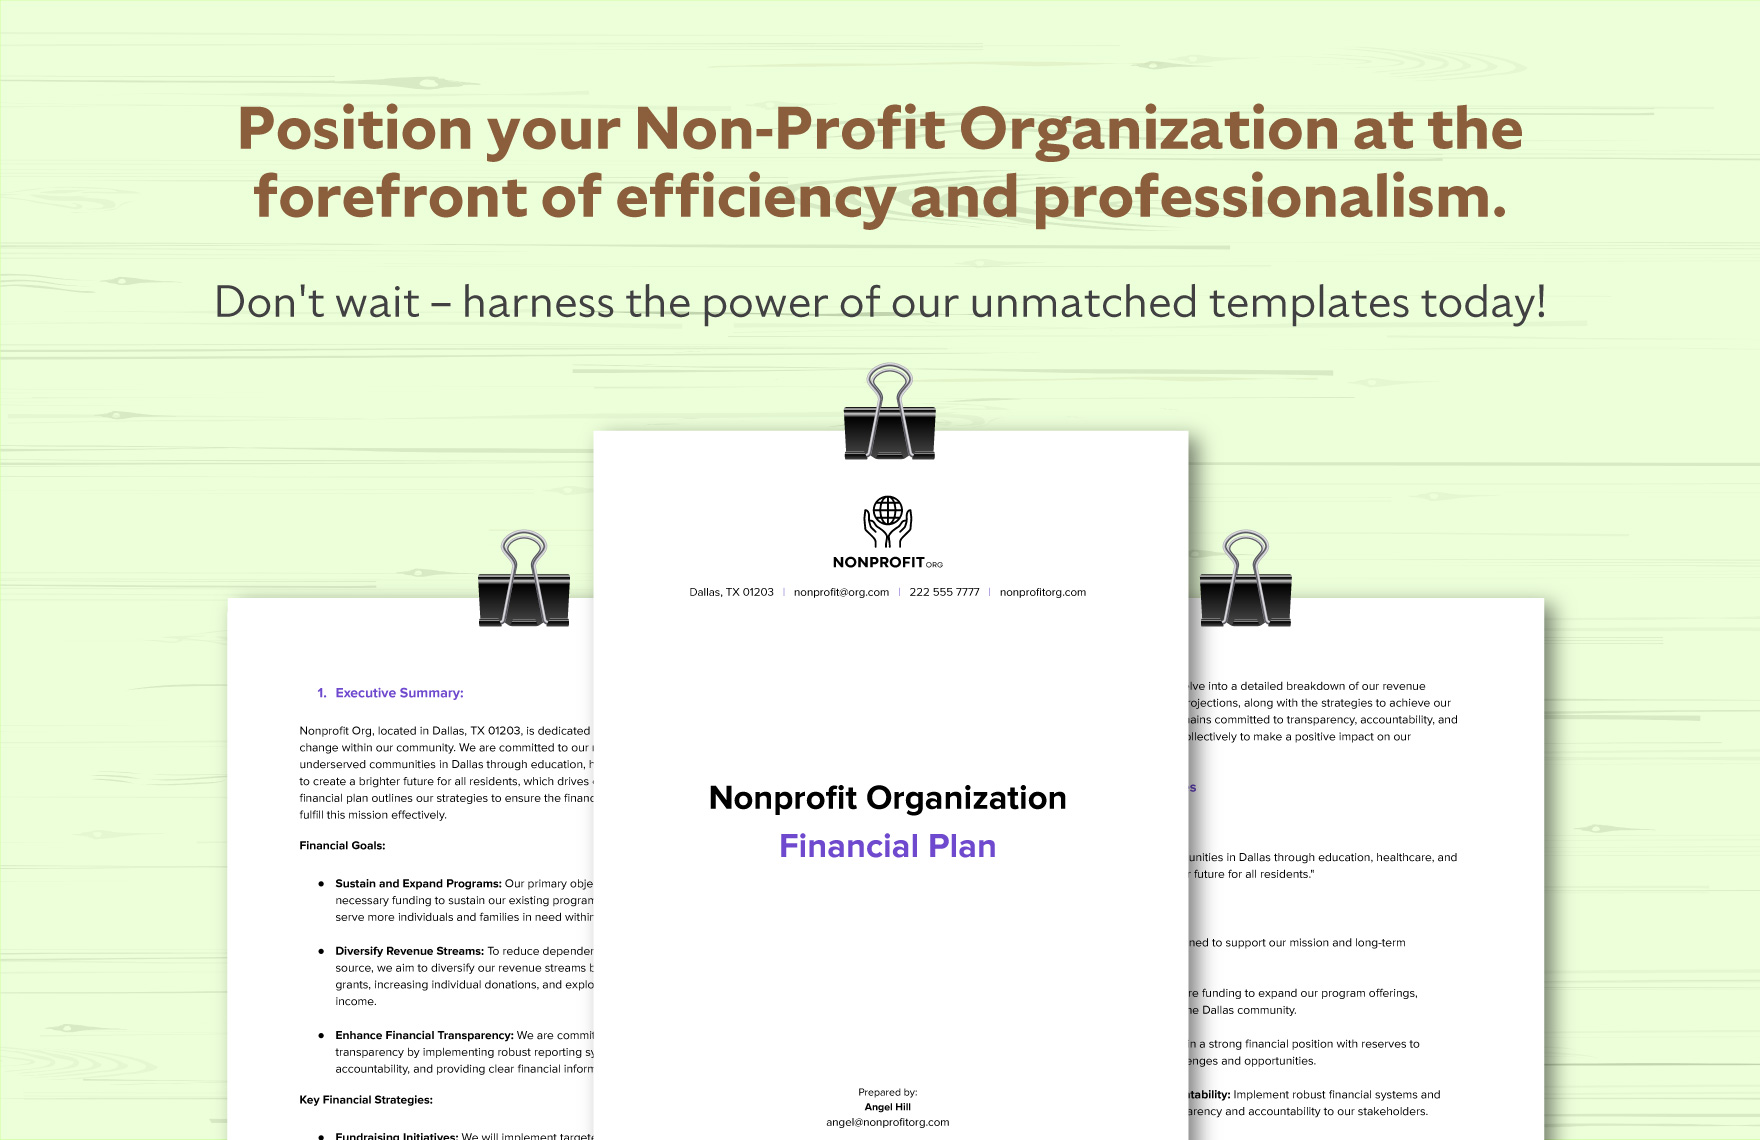 Nonprofit Organization Financial Plan Template